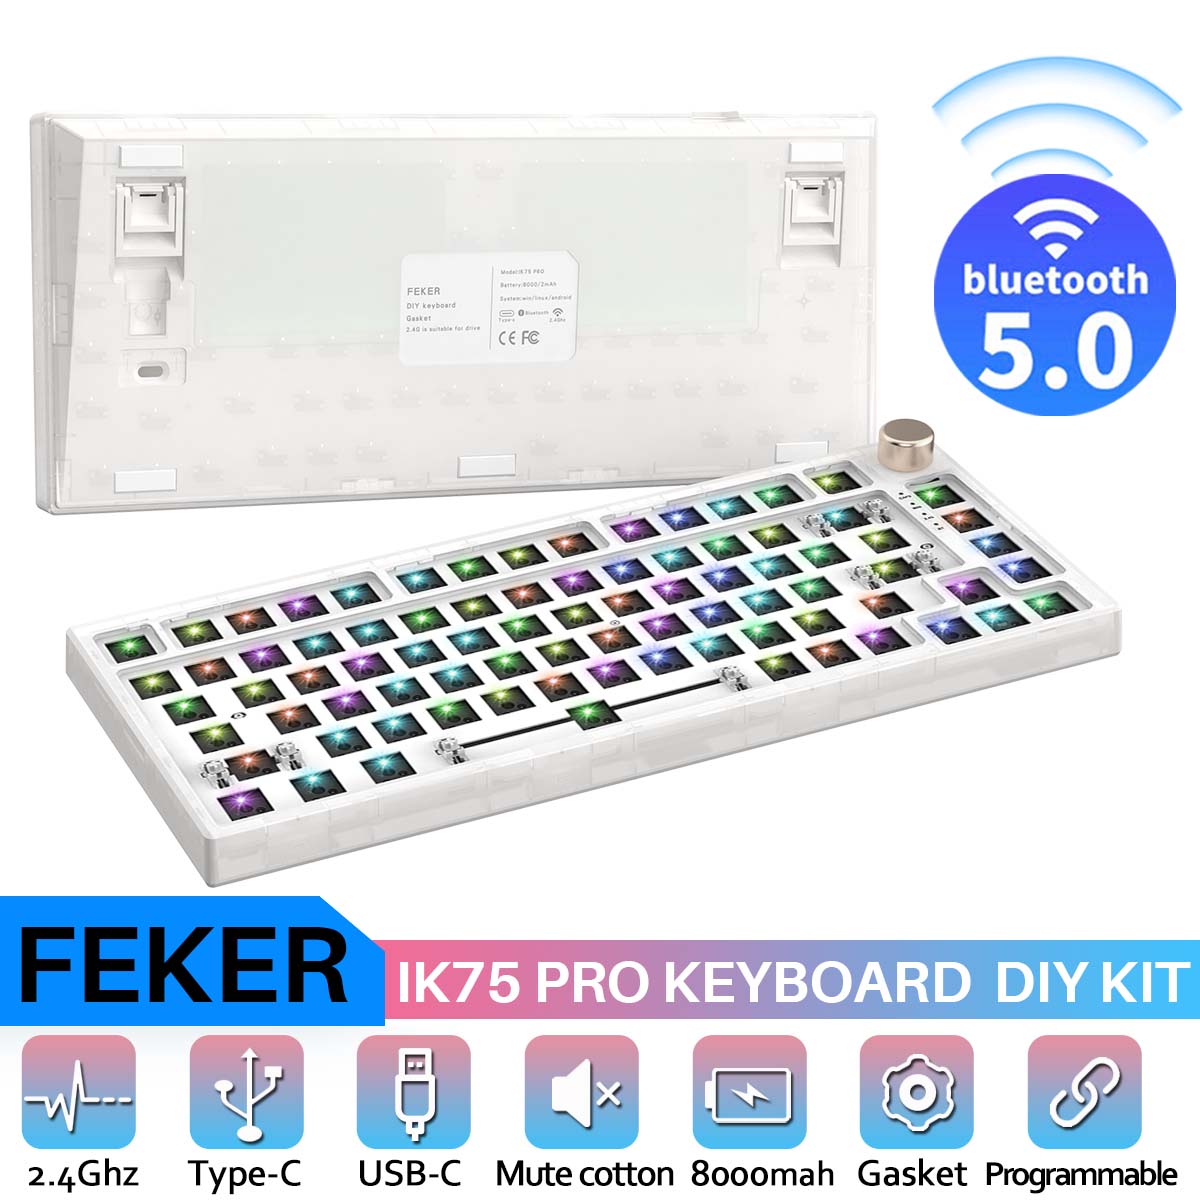 FEKER-IK75-PRO-Keyboard-Customized-Kit-82-Keys-Hot-Swappable-75-RGB-Wired-bluetooth-50-24GHz-Triple--1923909